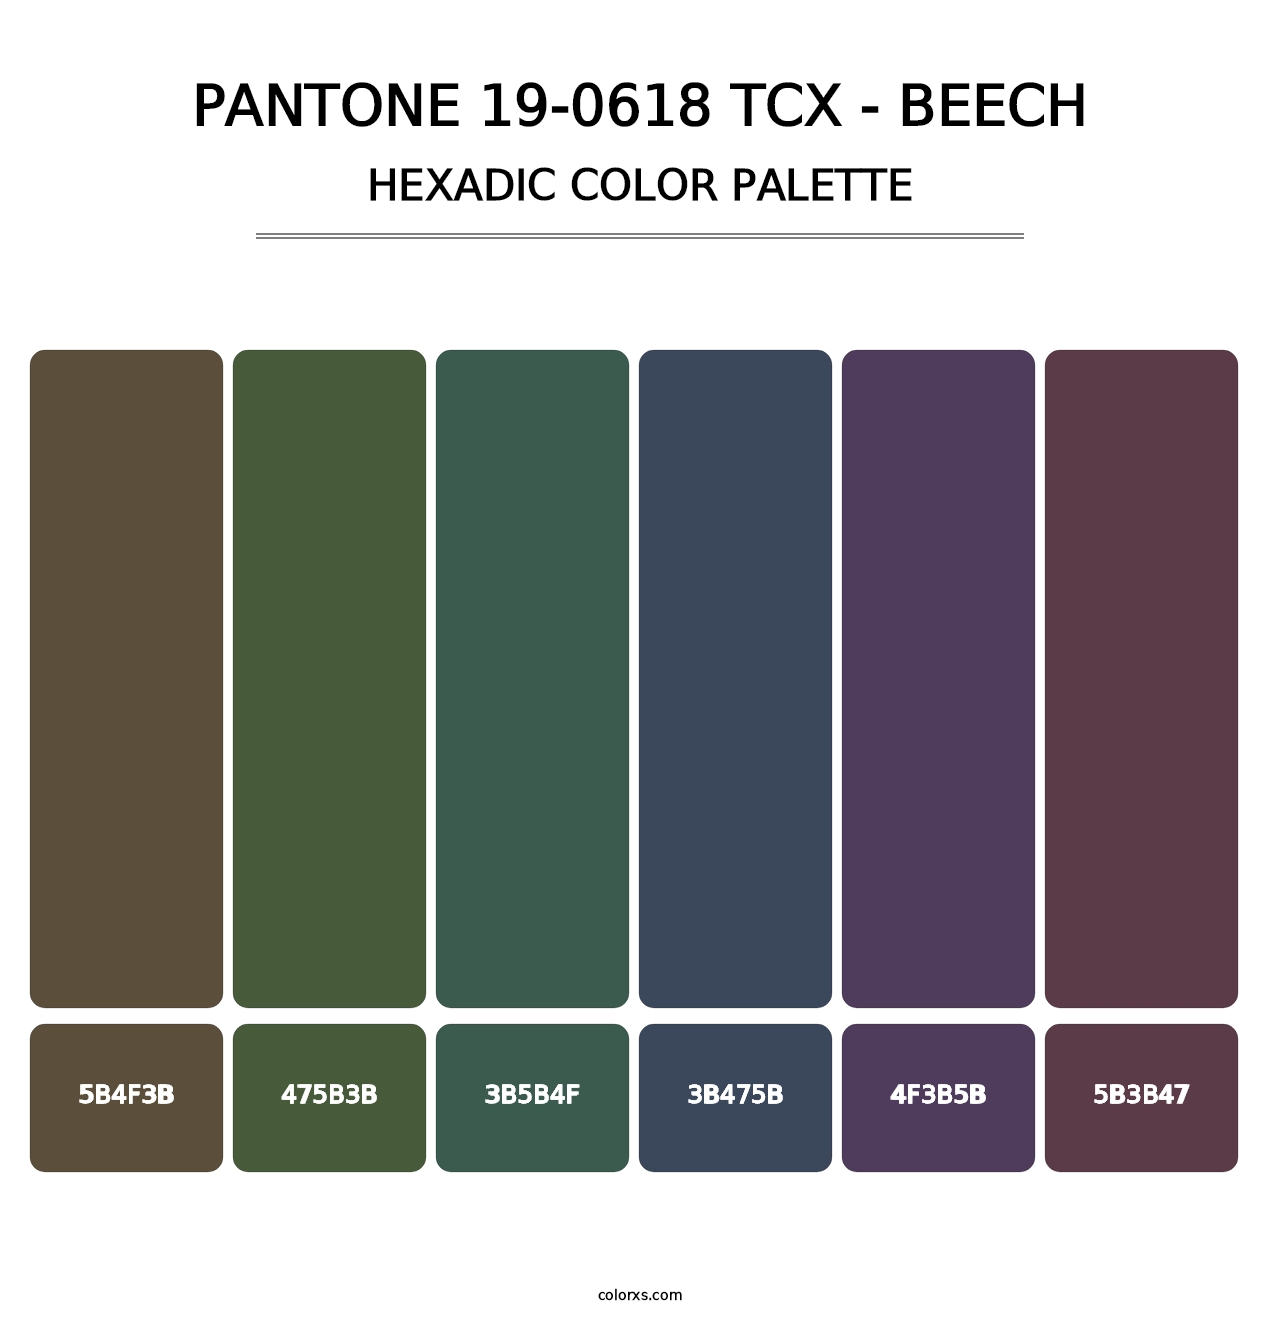 PANTONE 19-0618 TCX - Beech - Hexadic Color Palette